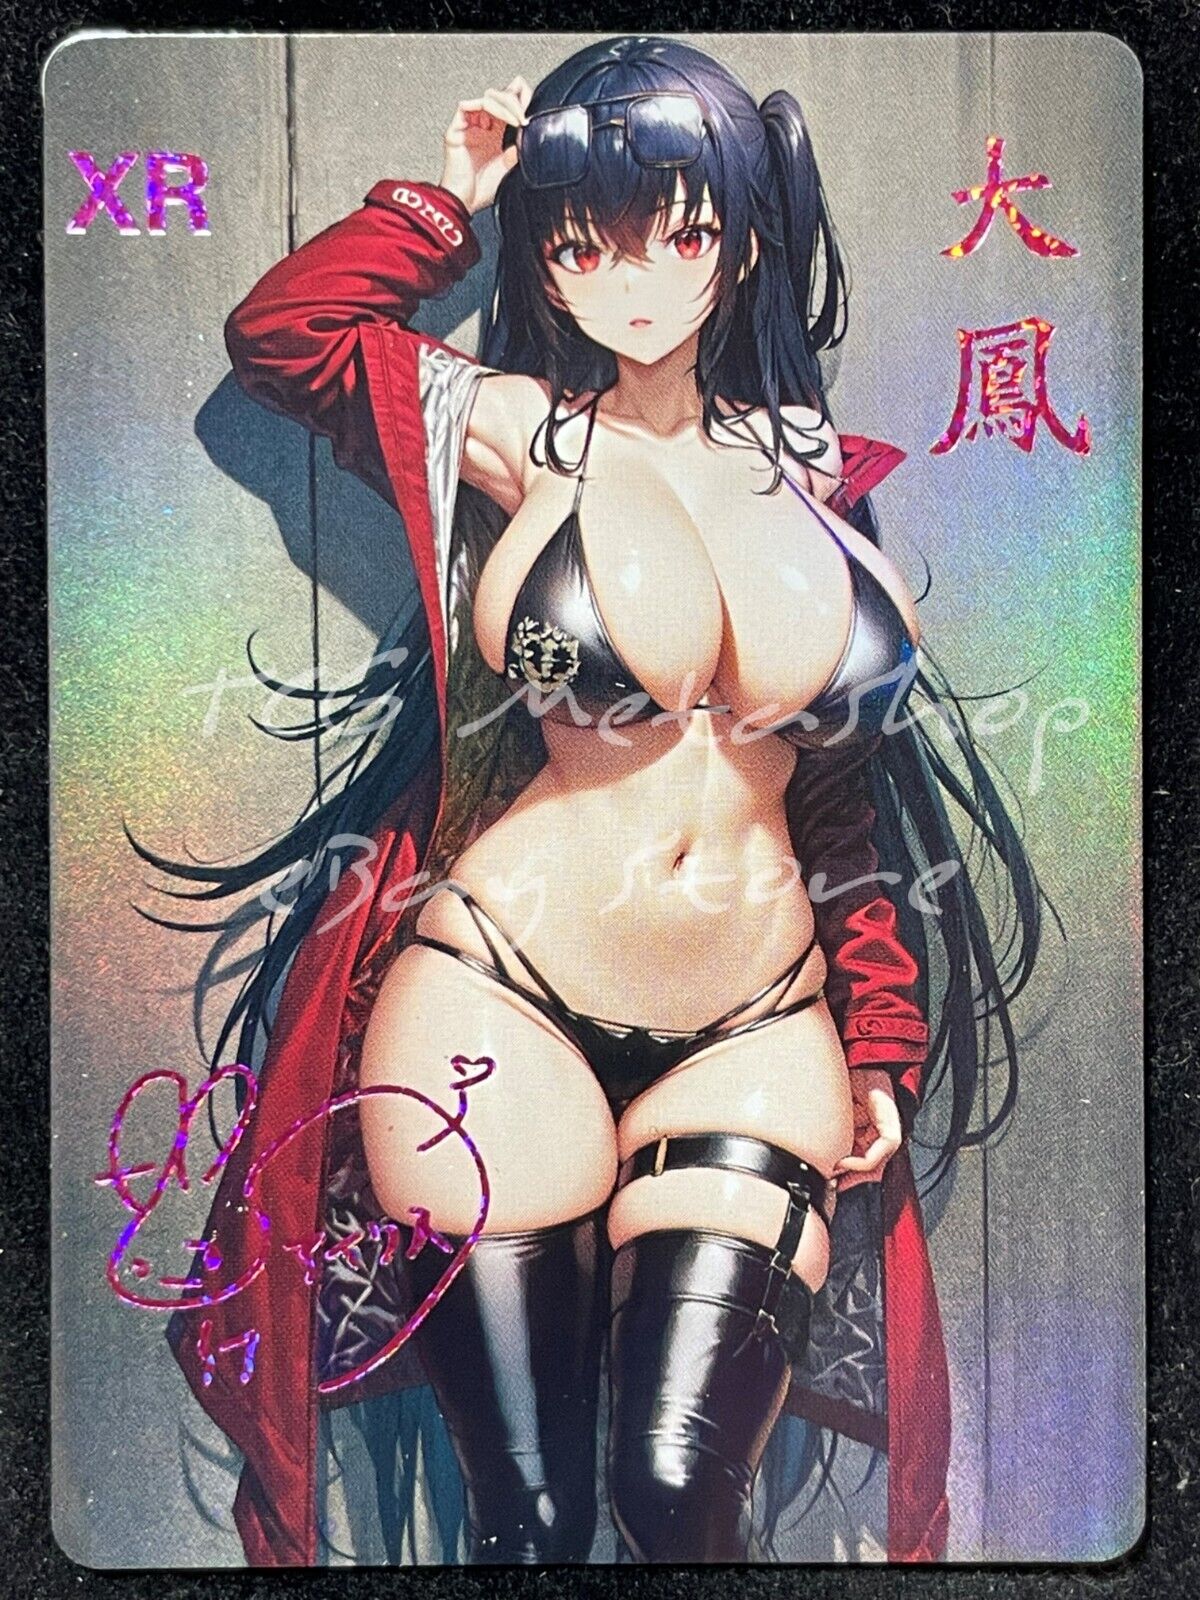 🔥 ACG [Pick your Custom XR card] Goddess Story Anime Waifu Doujin 🔥